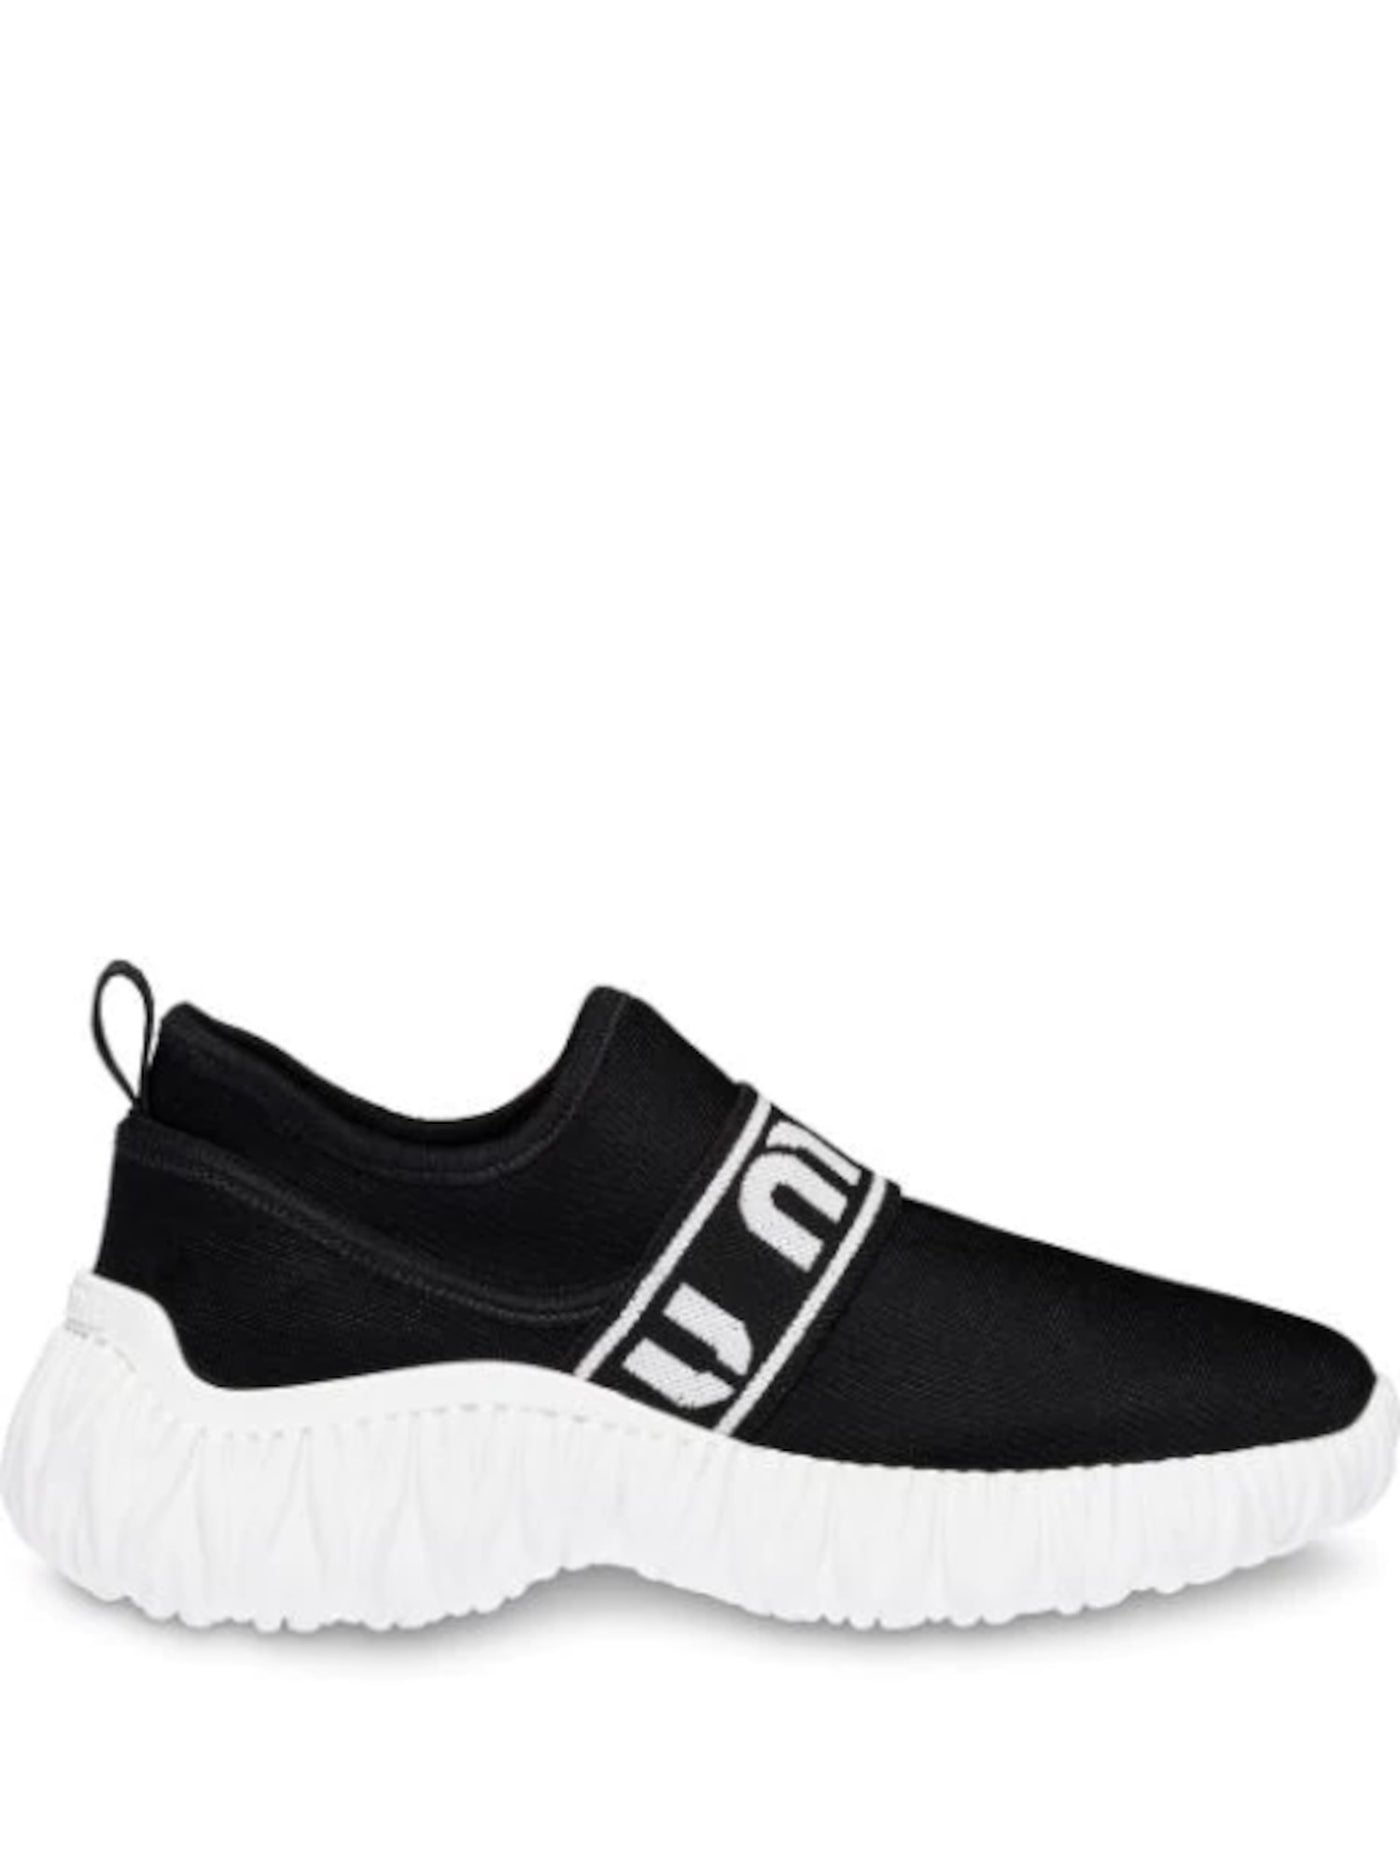 MIU MIU Womens Black 1-1/2" Platform Logo Calzature Donna Round Toe Platform Slip On Athletic Running Shoes 36.5